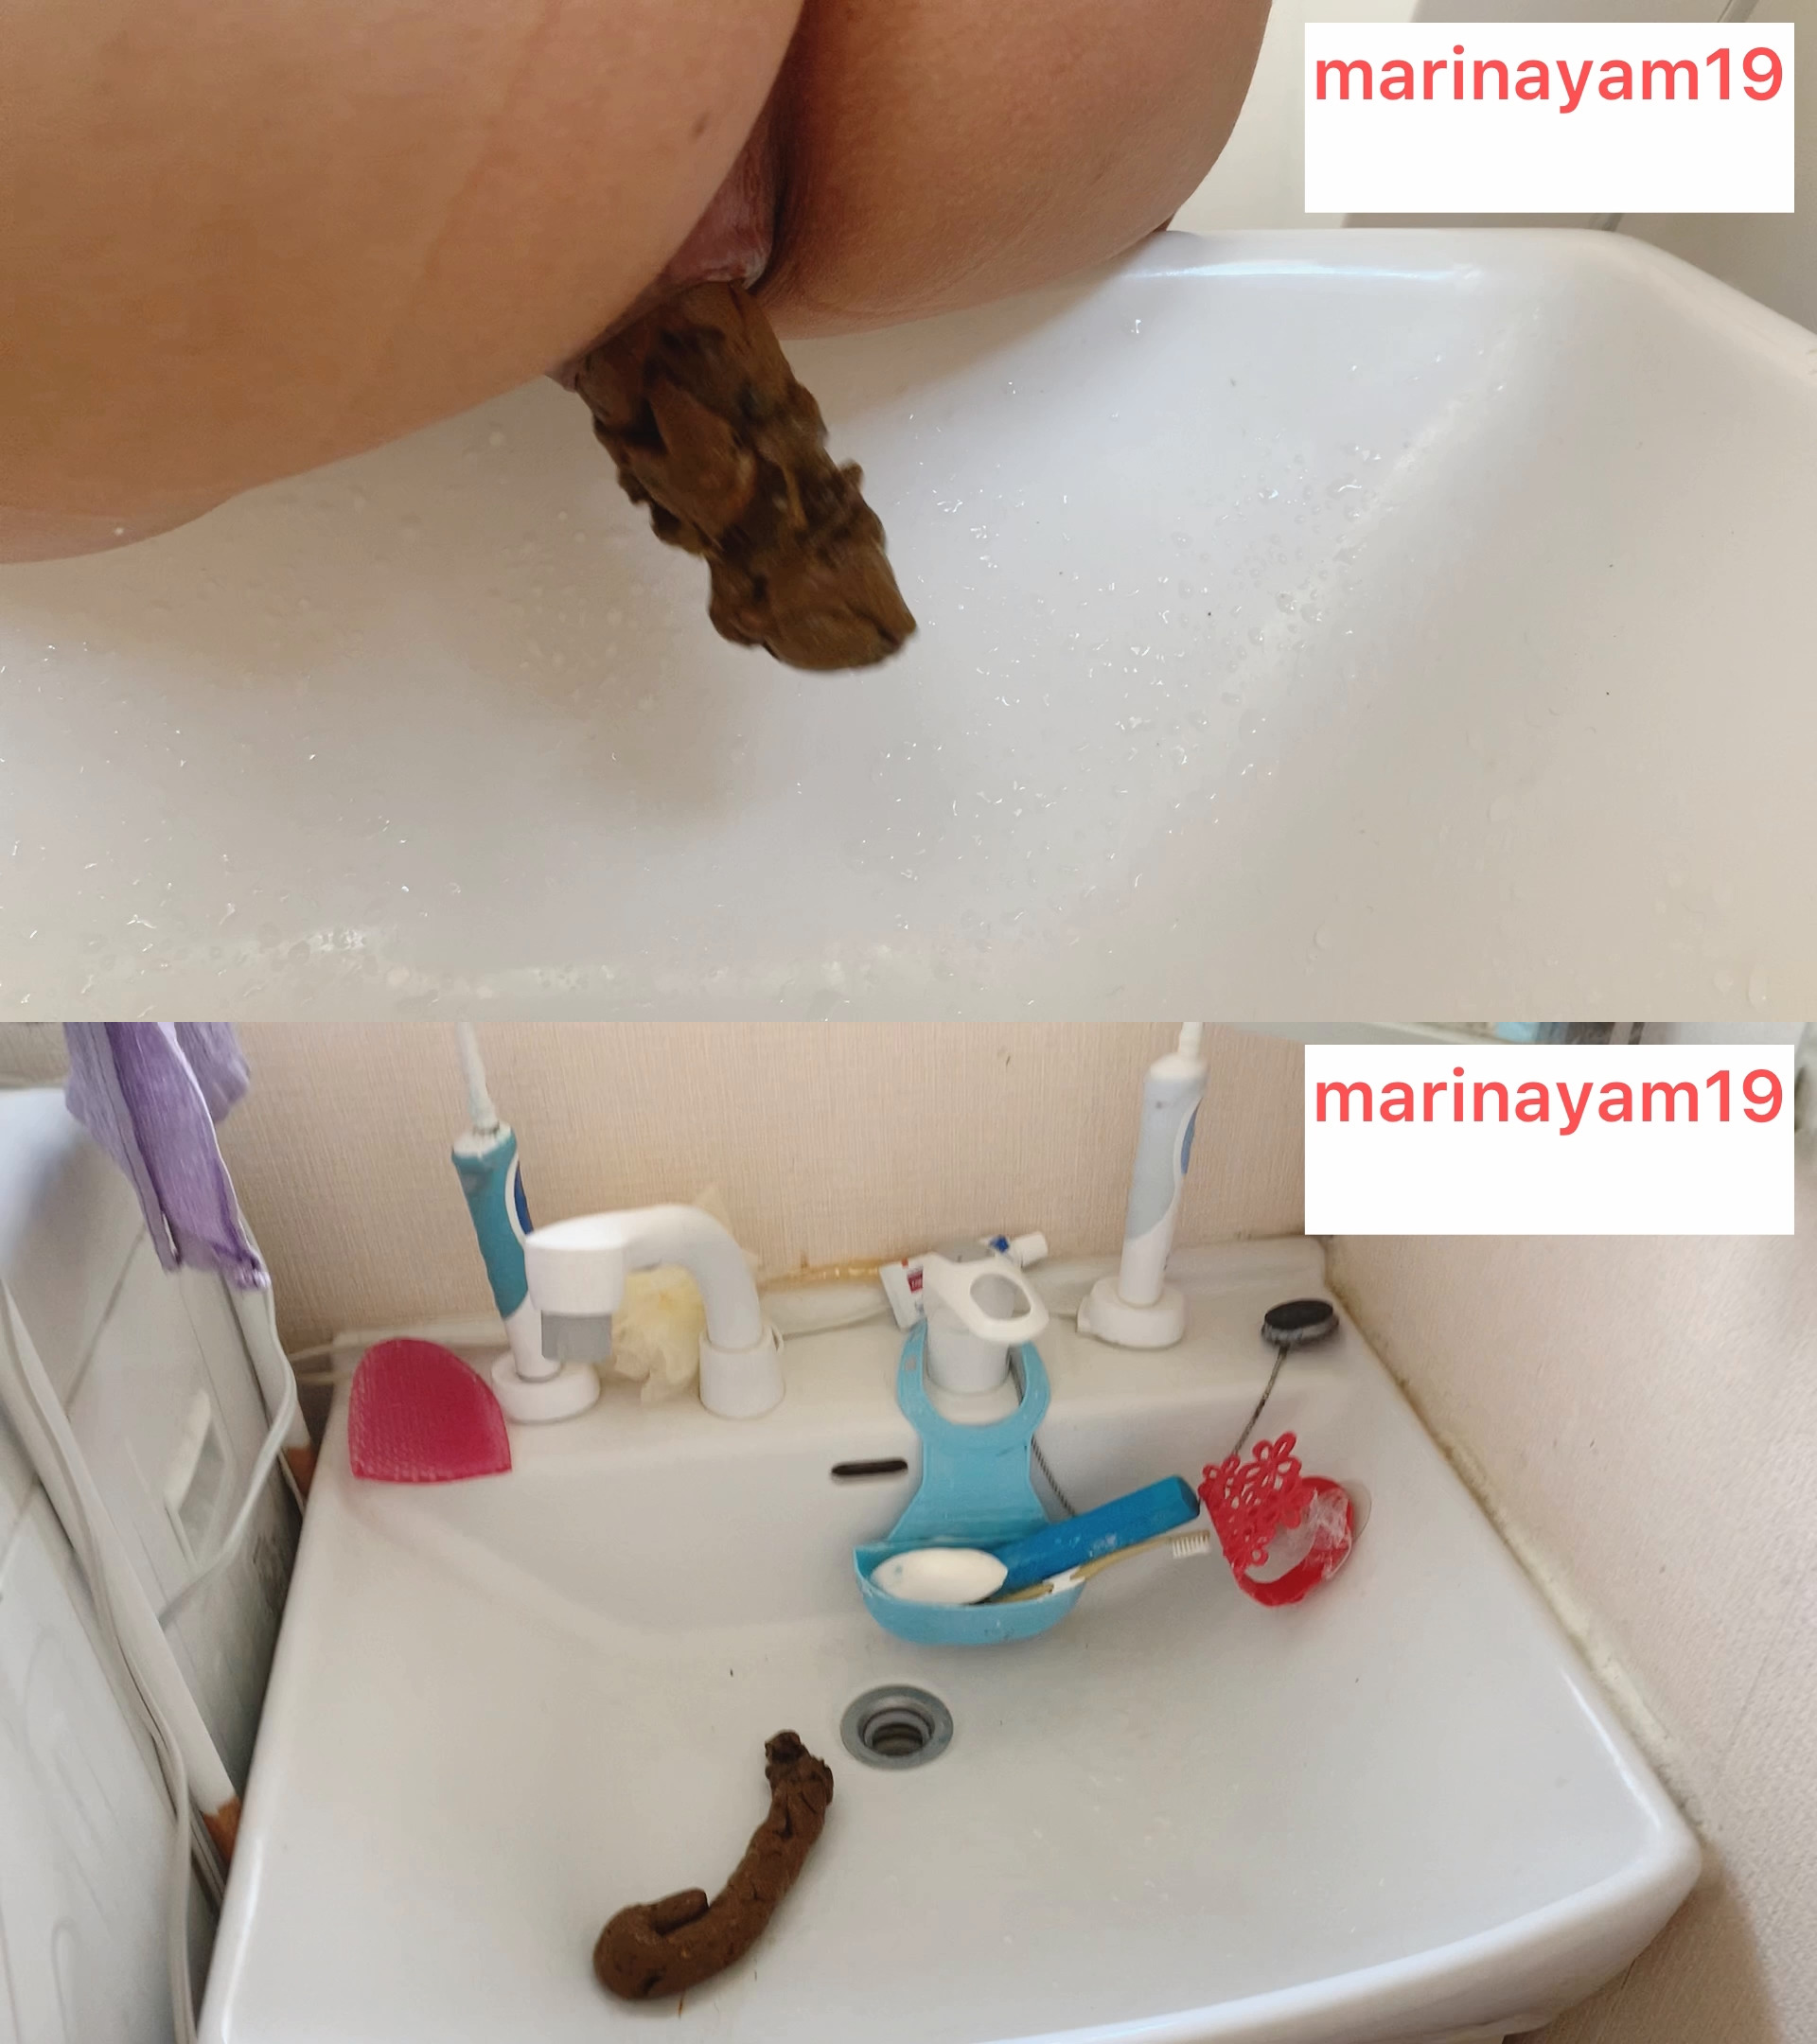 Marinayam19 – Huge shit left in the sink!!